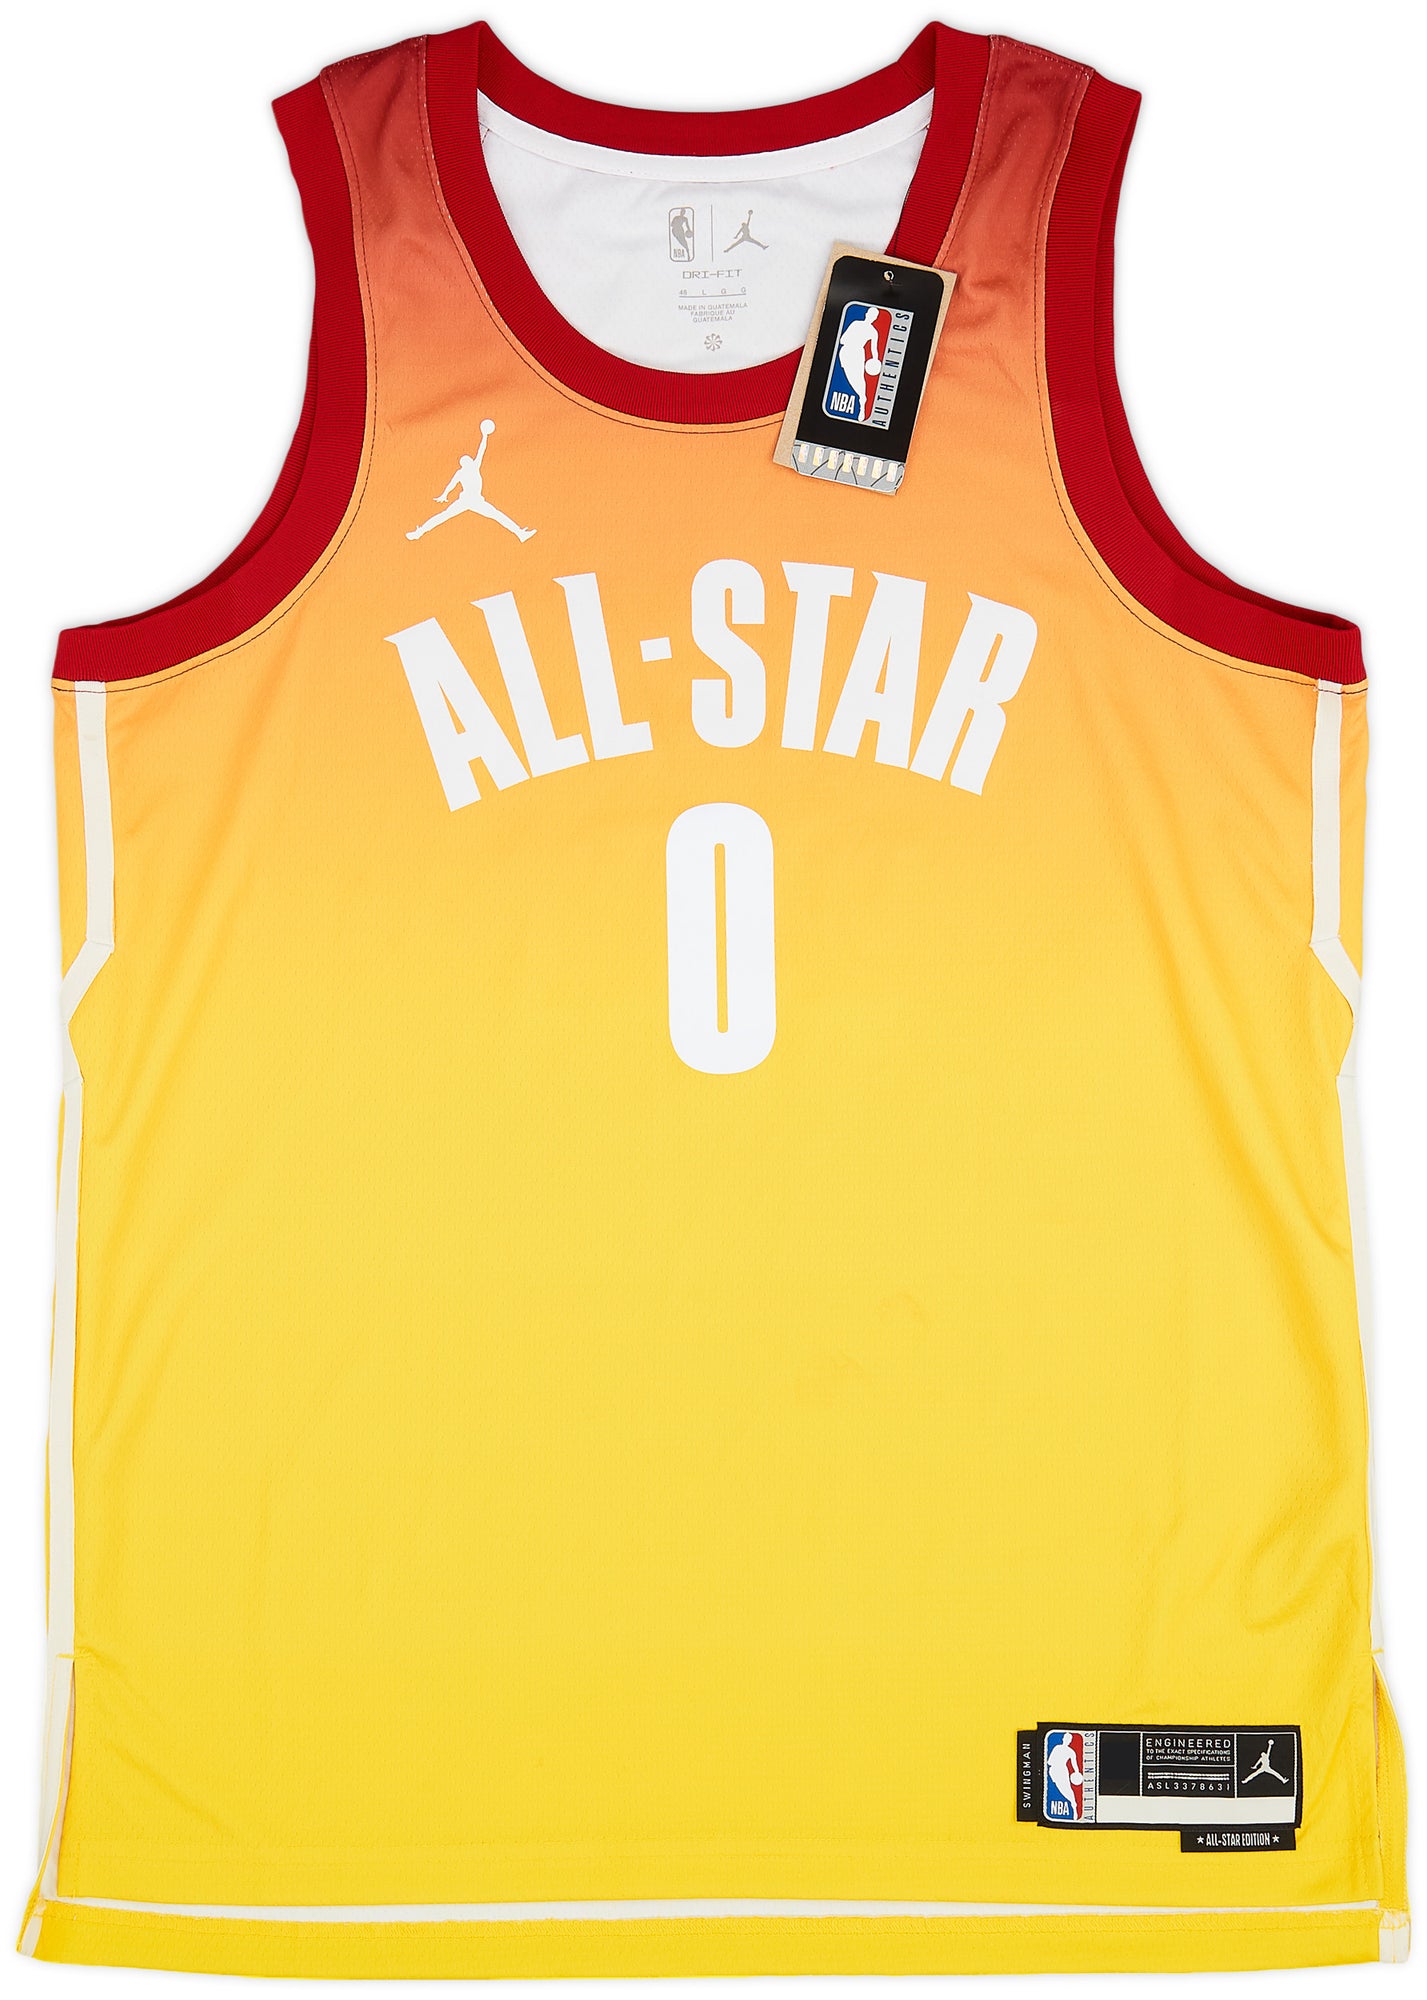 All-Star Edition Jordan Dri-Fit NBA Swingman Jersey